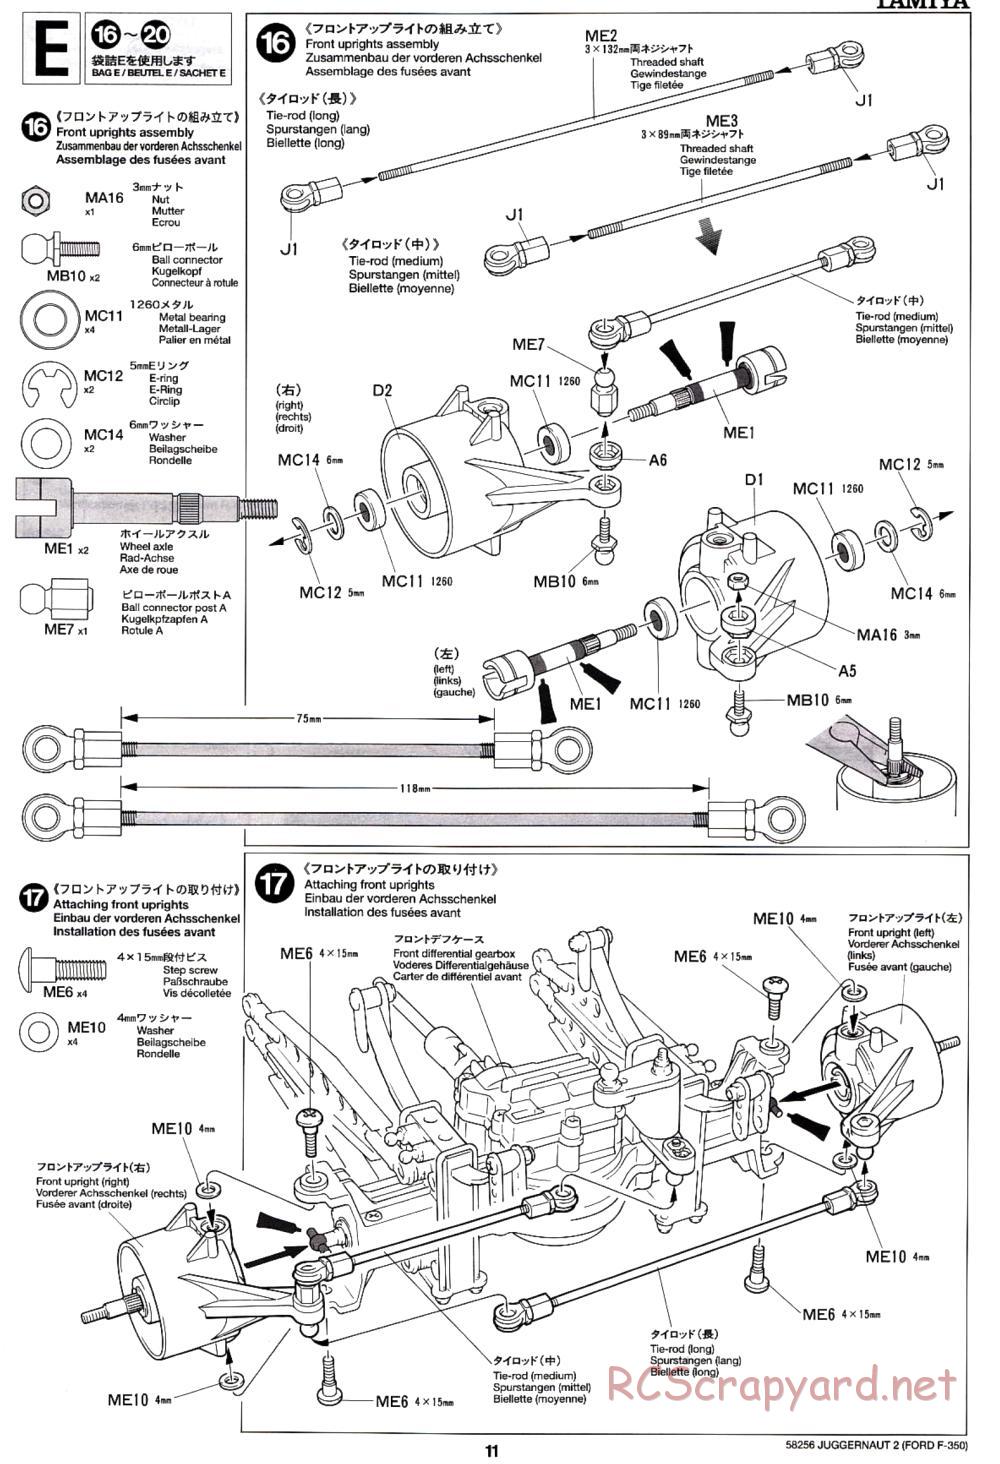 Tamiya - Juggernaut 2 Chassis - Manual - Page 11